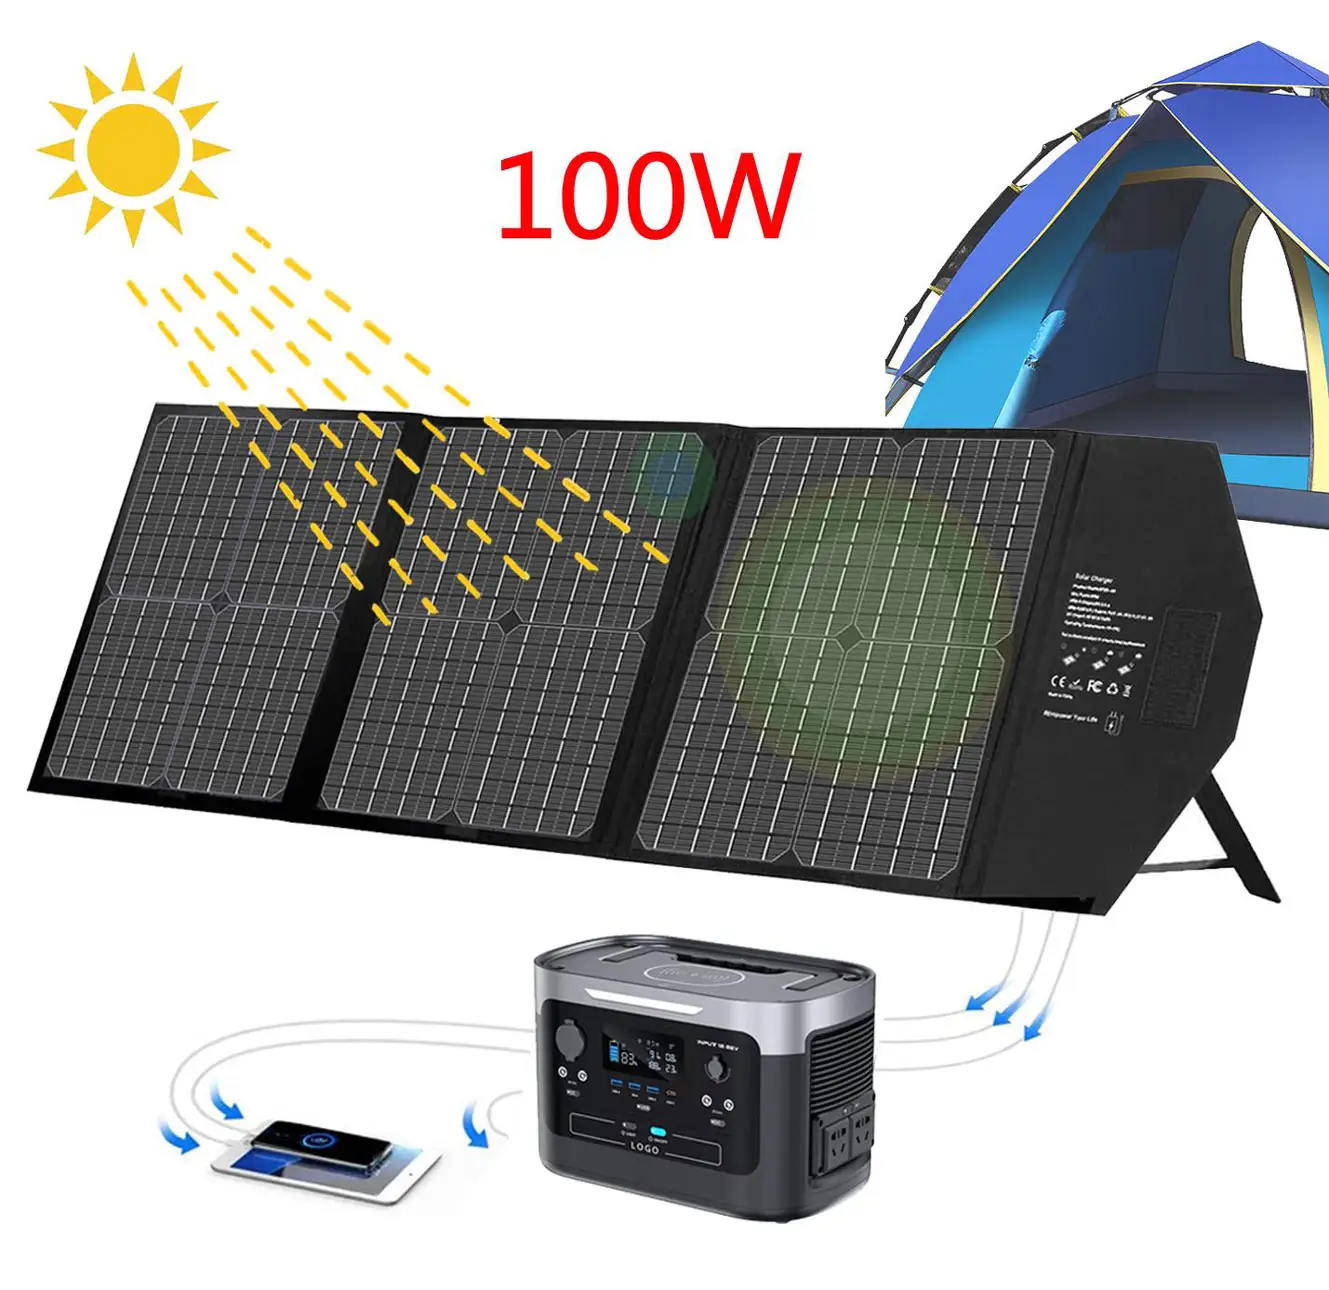 Tragbare 100W Watt ETFE Kicks tand Mini flexible faltbare Systeme Solar Photovoltaik Panel Ladegerät Kit für Home Camping Outdoor